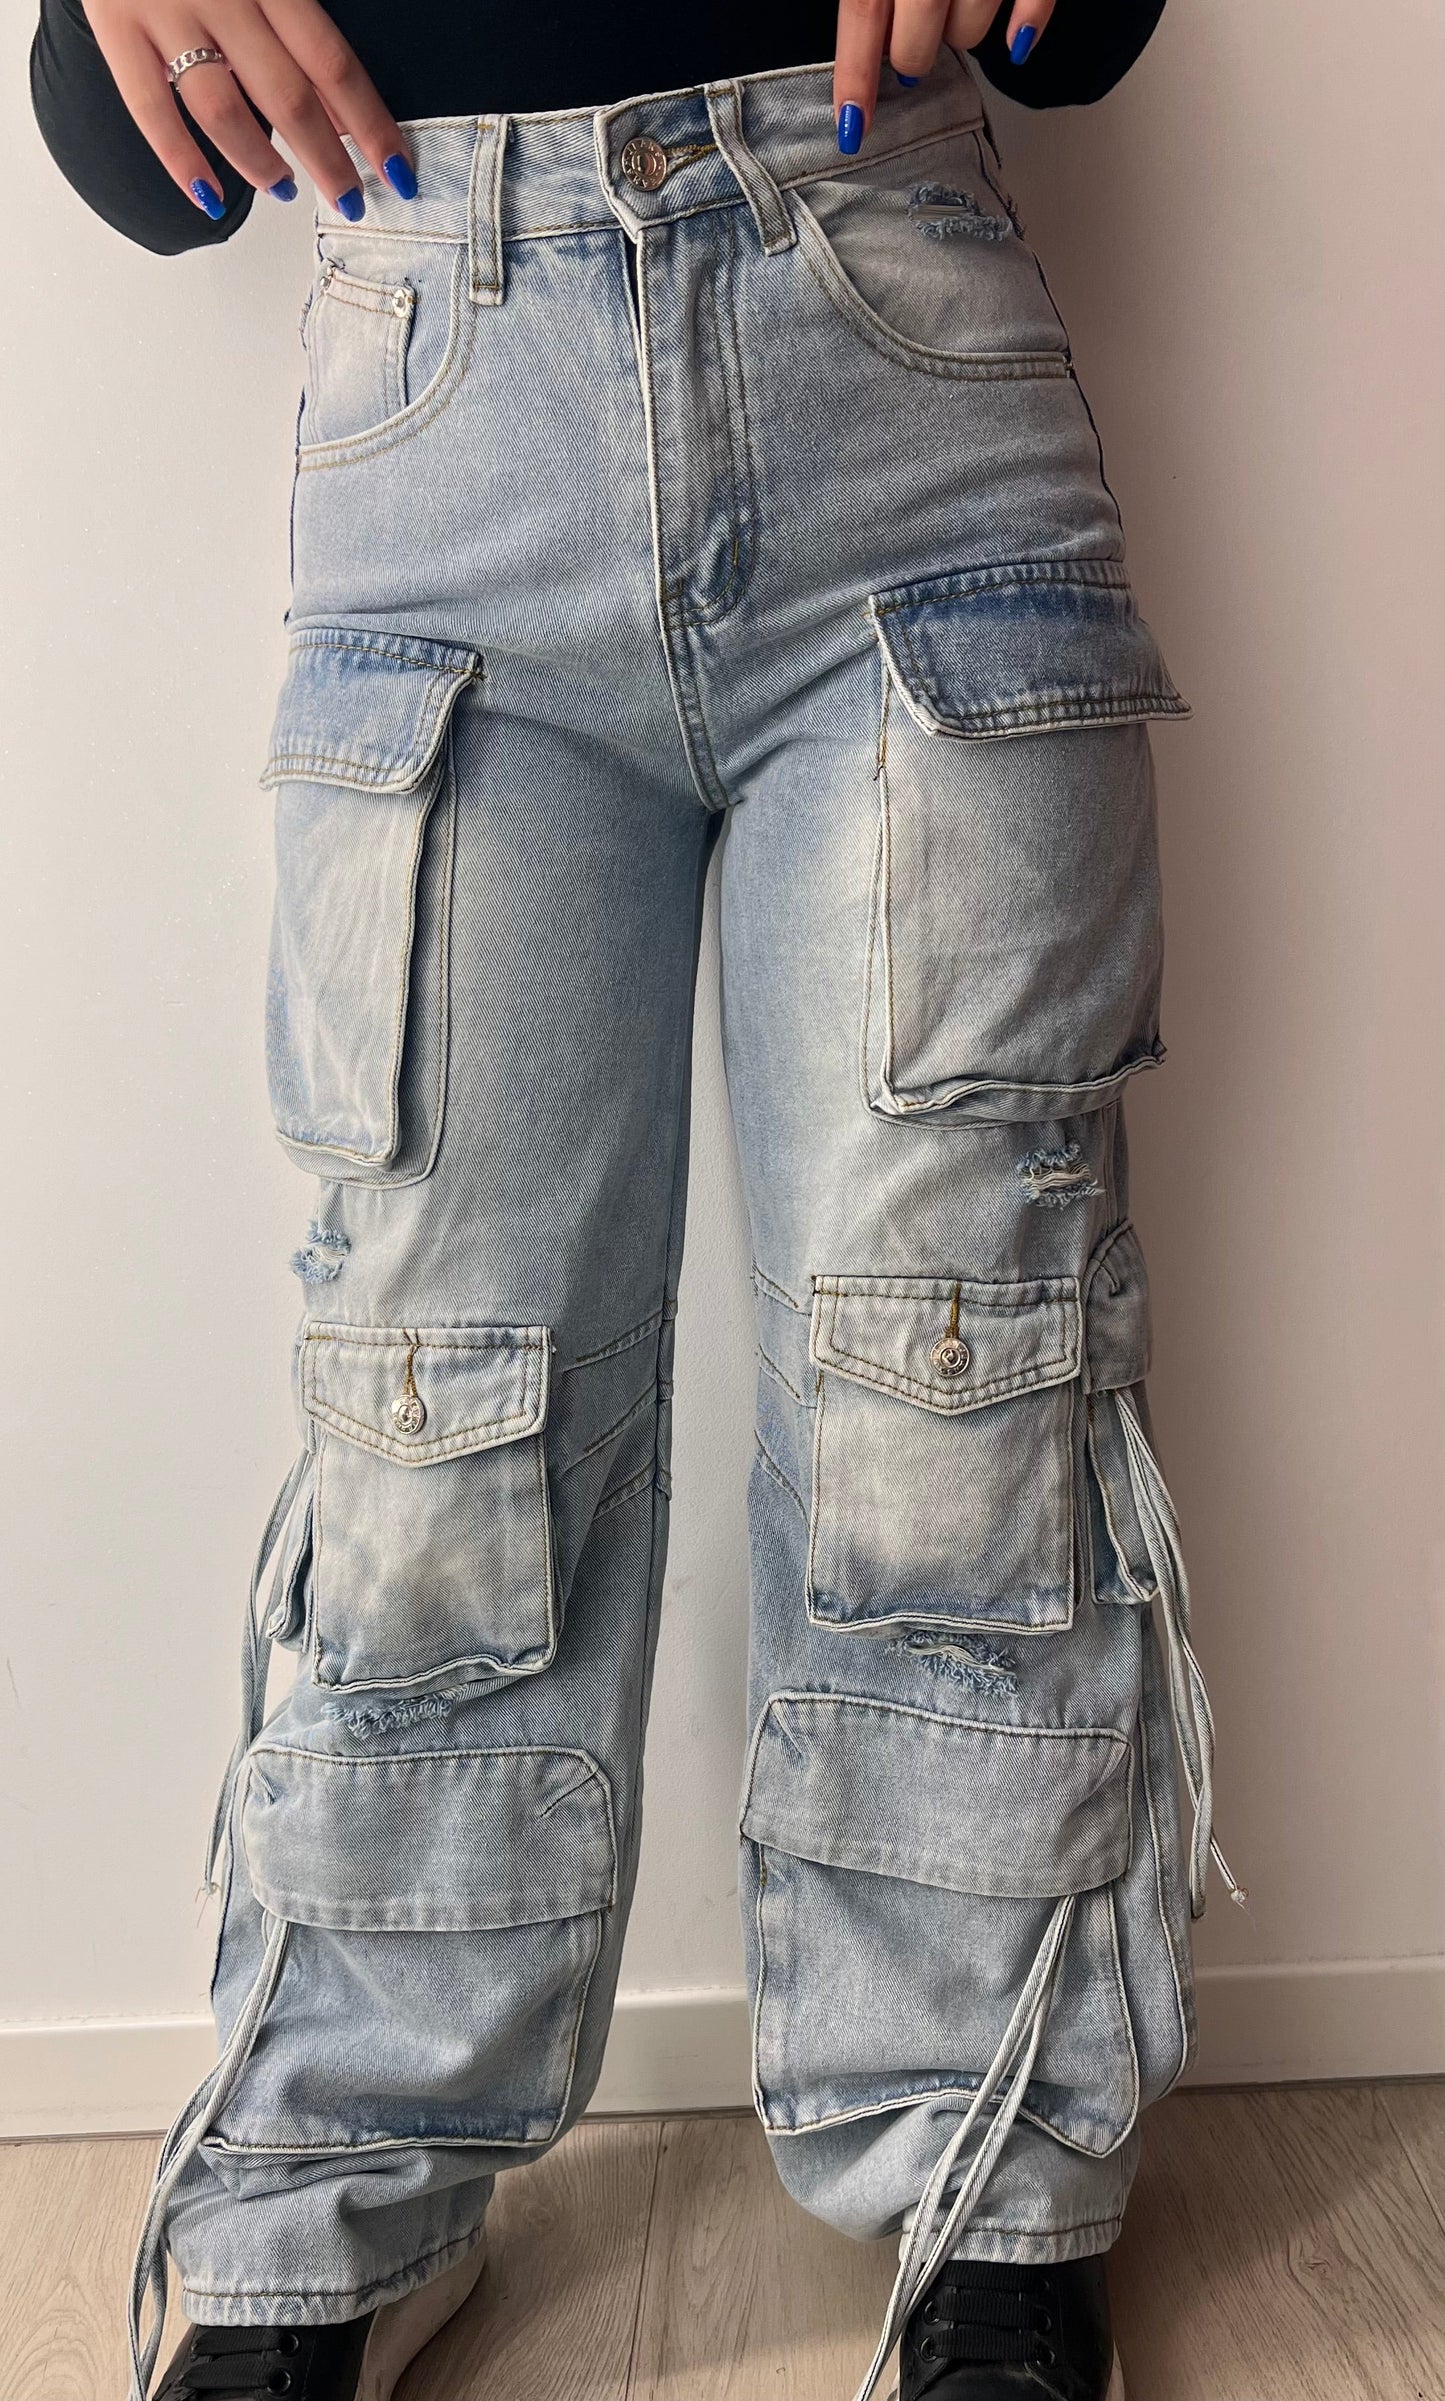 Jeans Cargo